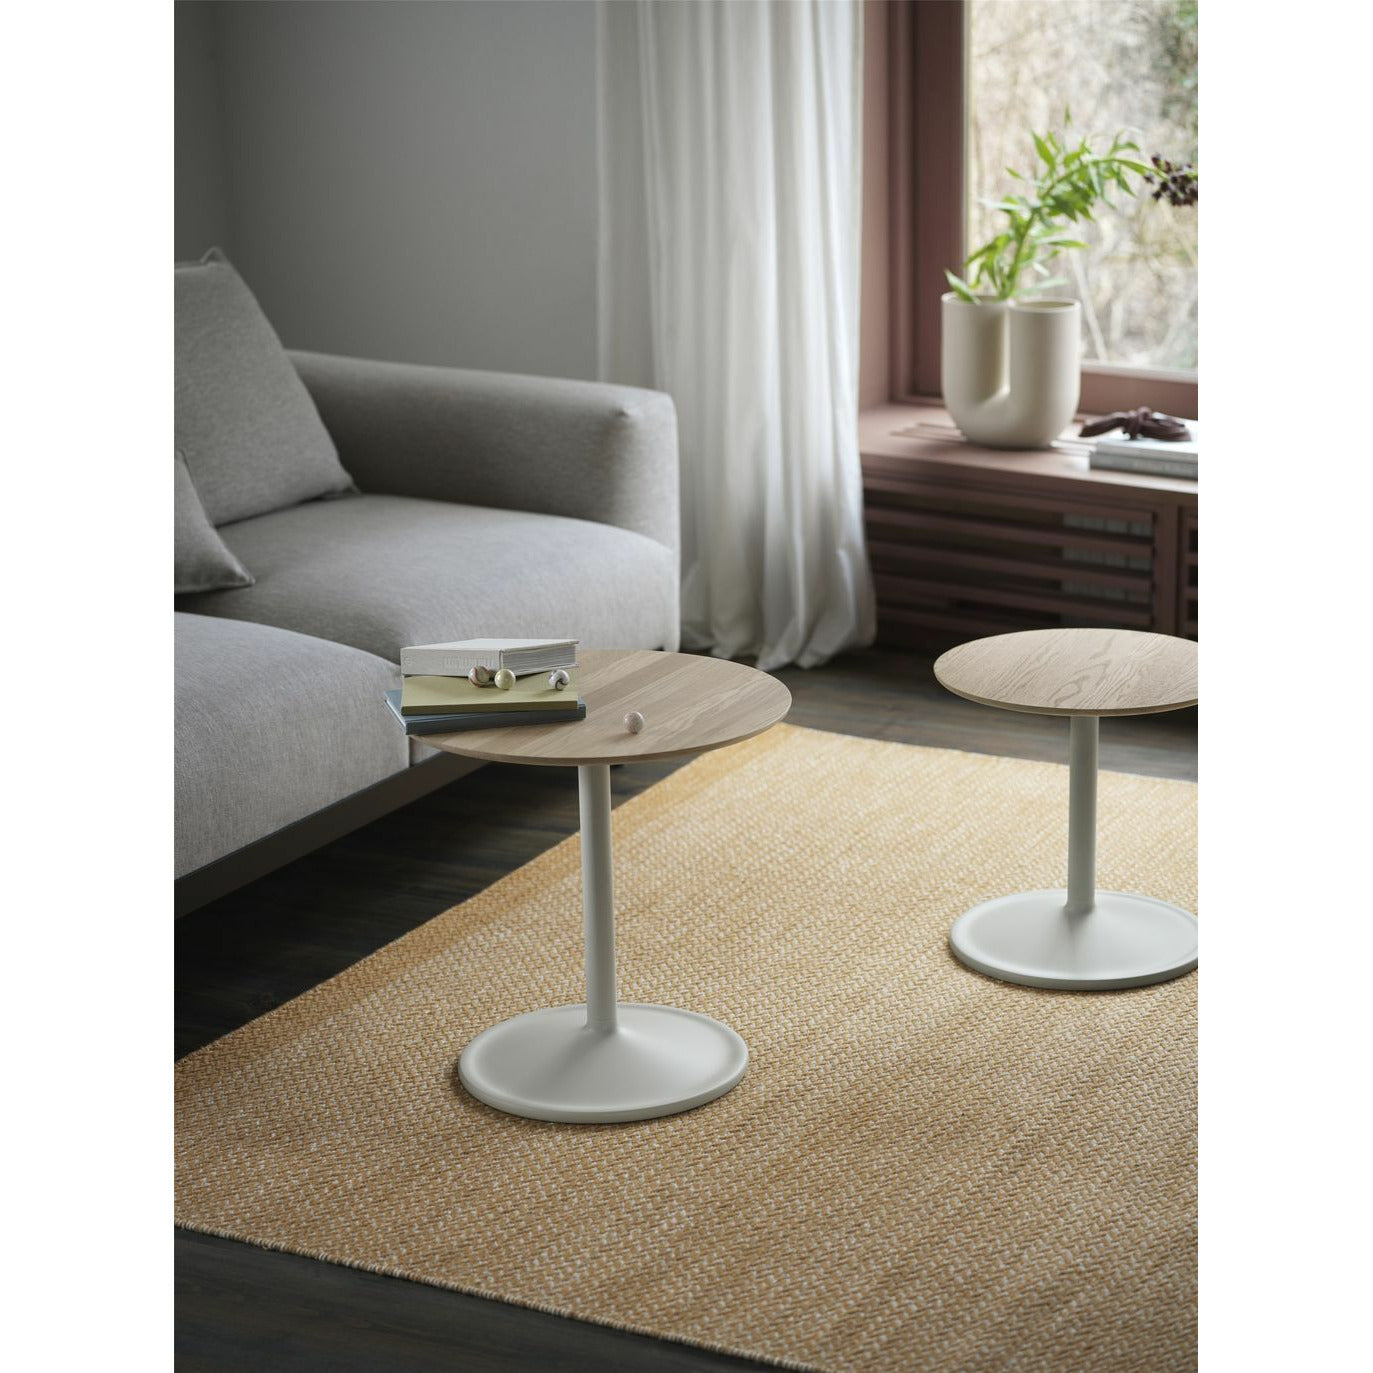 Muuto Table d'appoint douce Øx H 48x48 cm, chêne massif / Off blanc